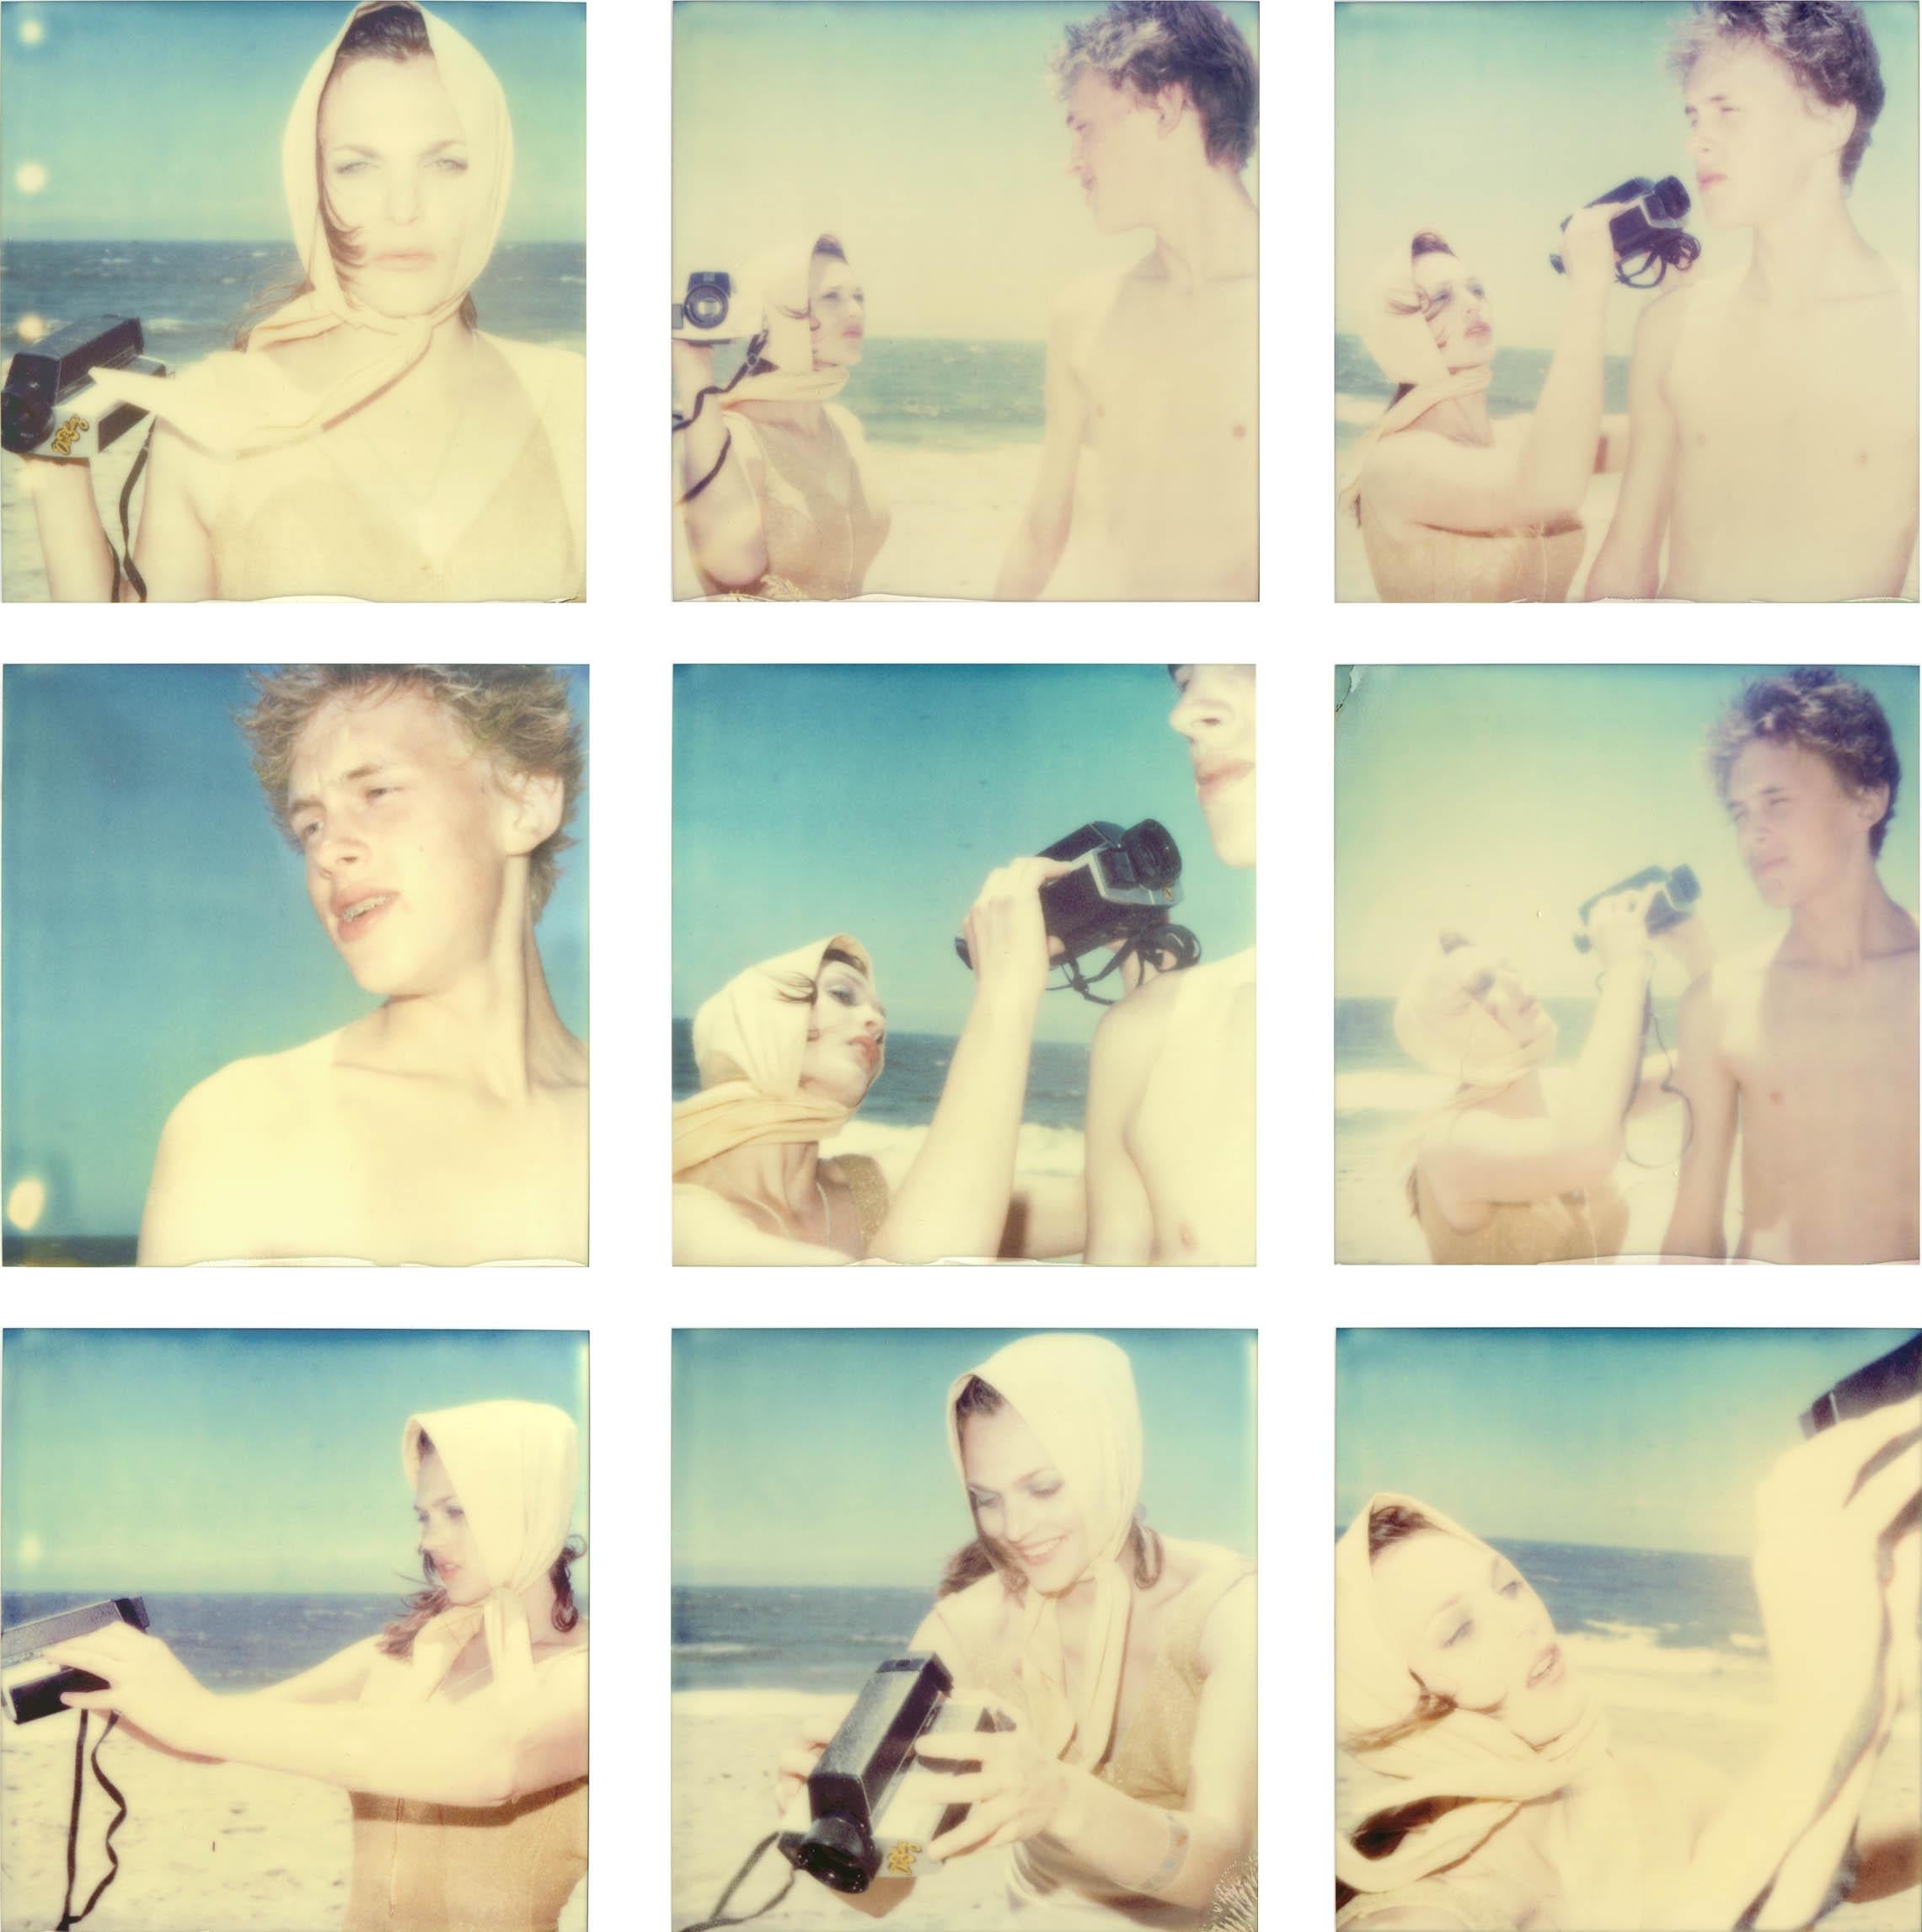 Stefanie Schneider Color Photograph - The Diva and the Boy (Beachshoot) - 9 pieces - Polaroid, Vintage, Contemporary